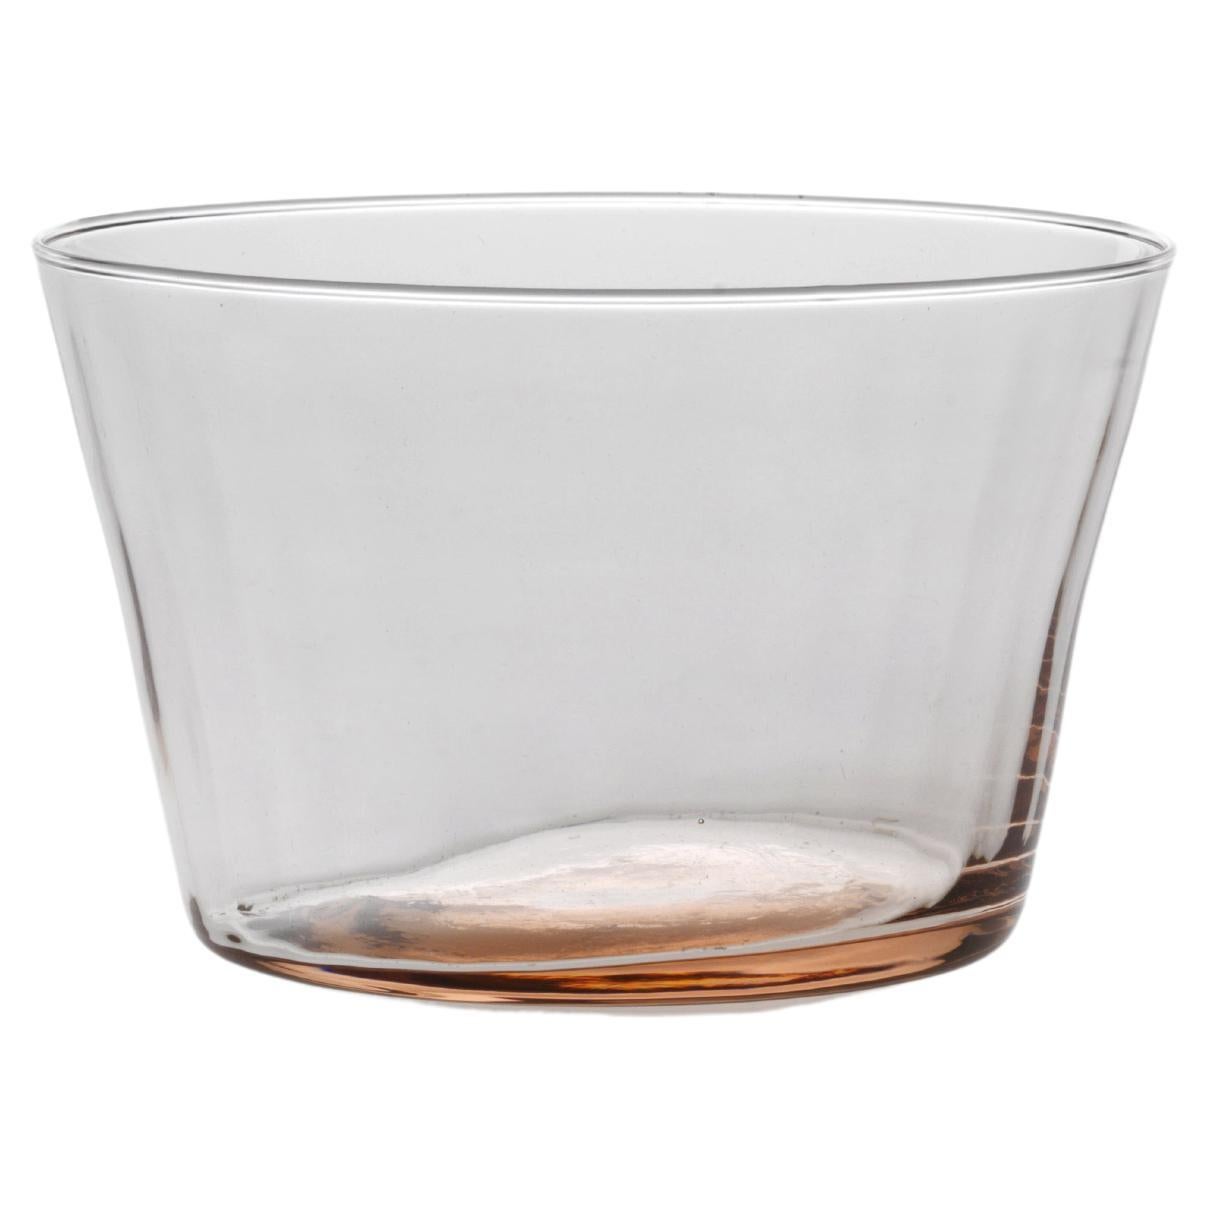 Coppetta, 6 Little Bowls Handcrafted Murano Glass, Rose Quartz Plissé MUN by VG